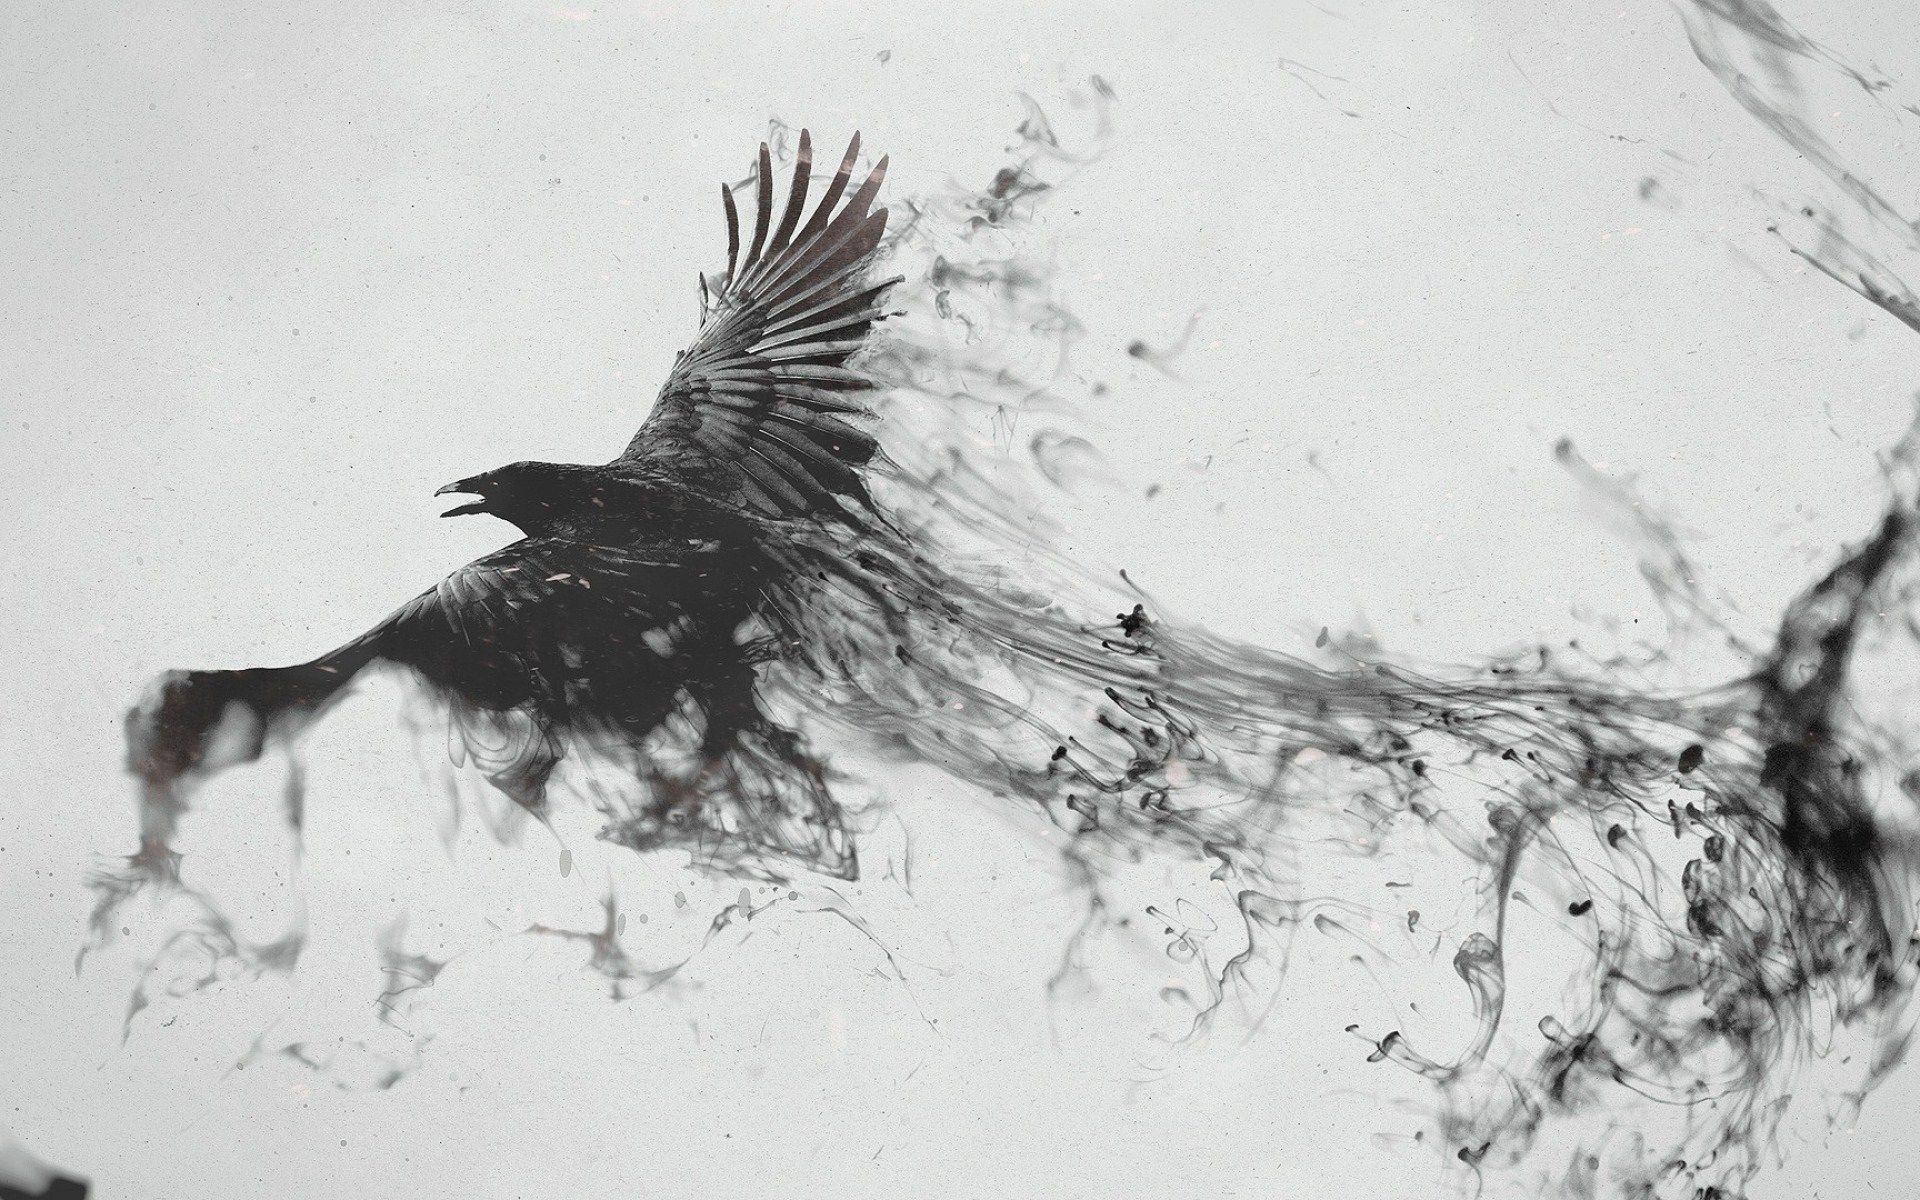 Abstract-Smoke-Flying-Bird-Art-Photos-5275 | Birds art, flight and ...